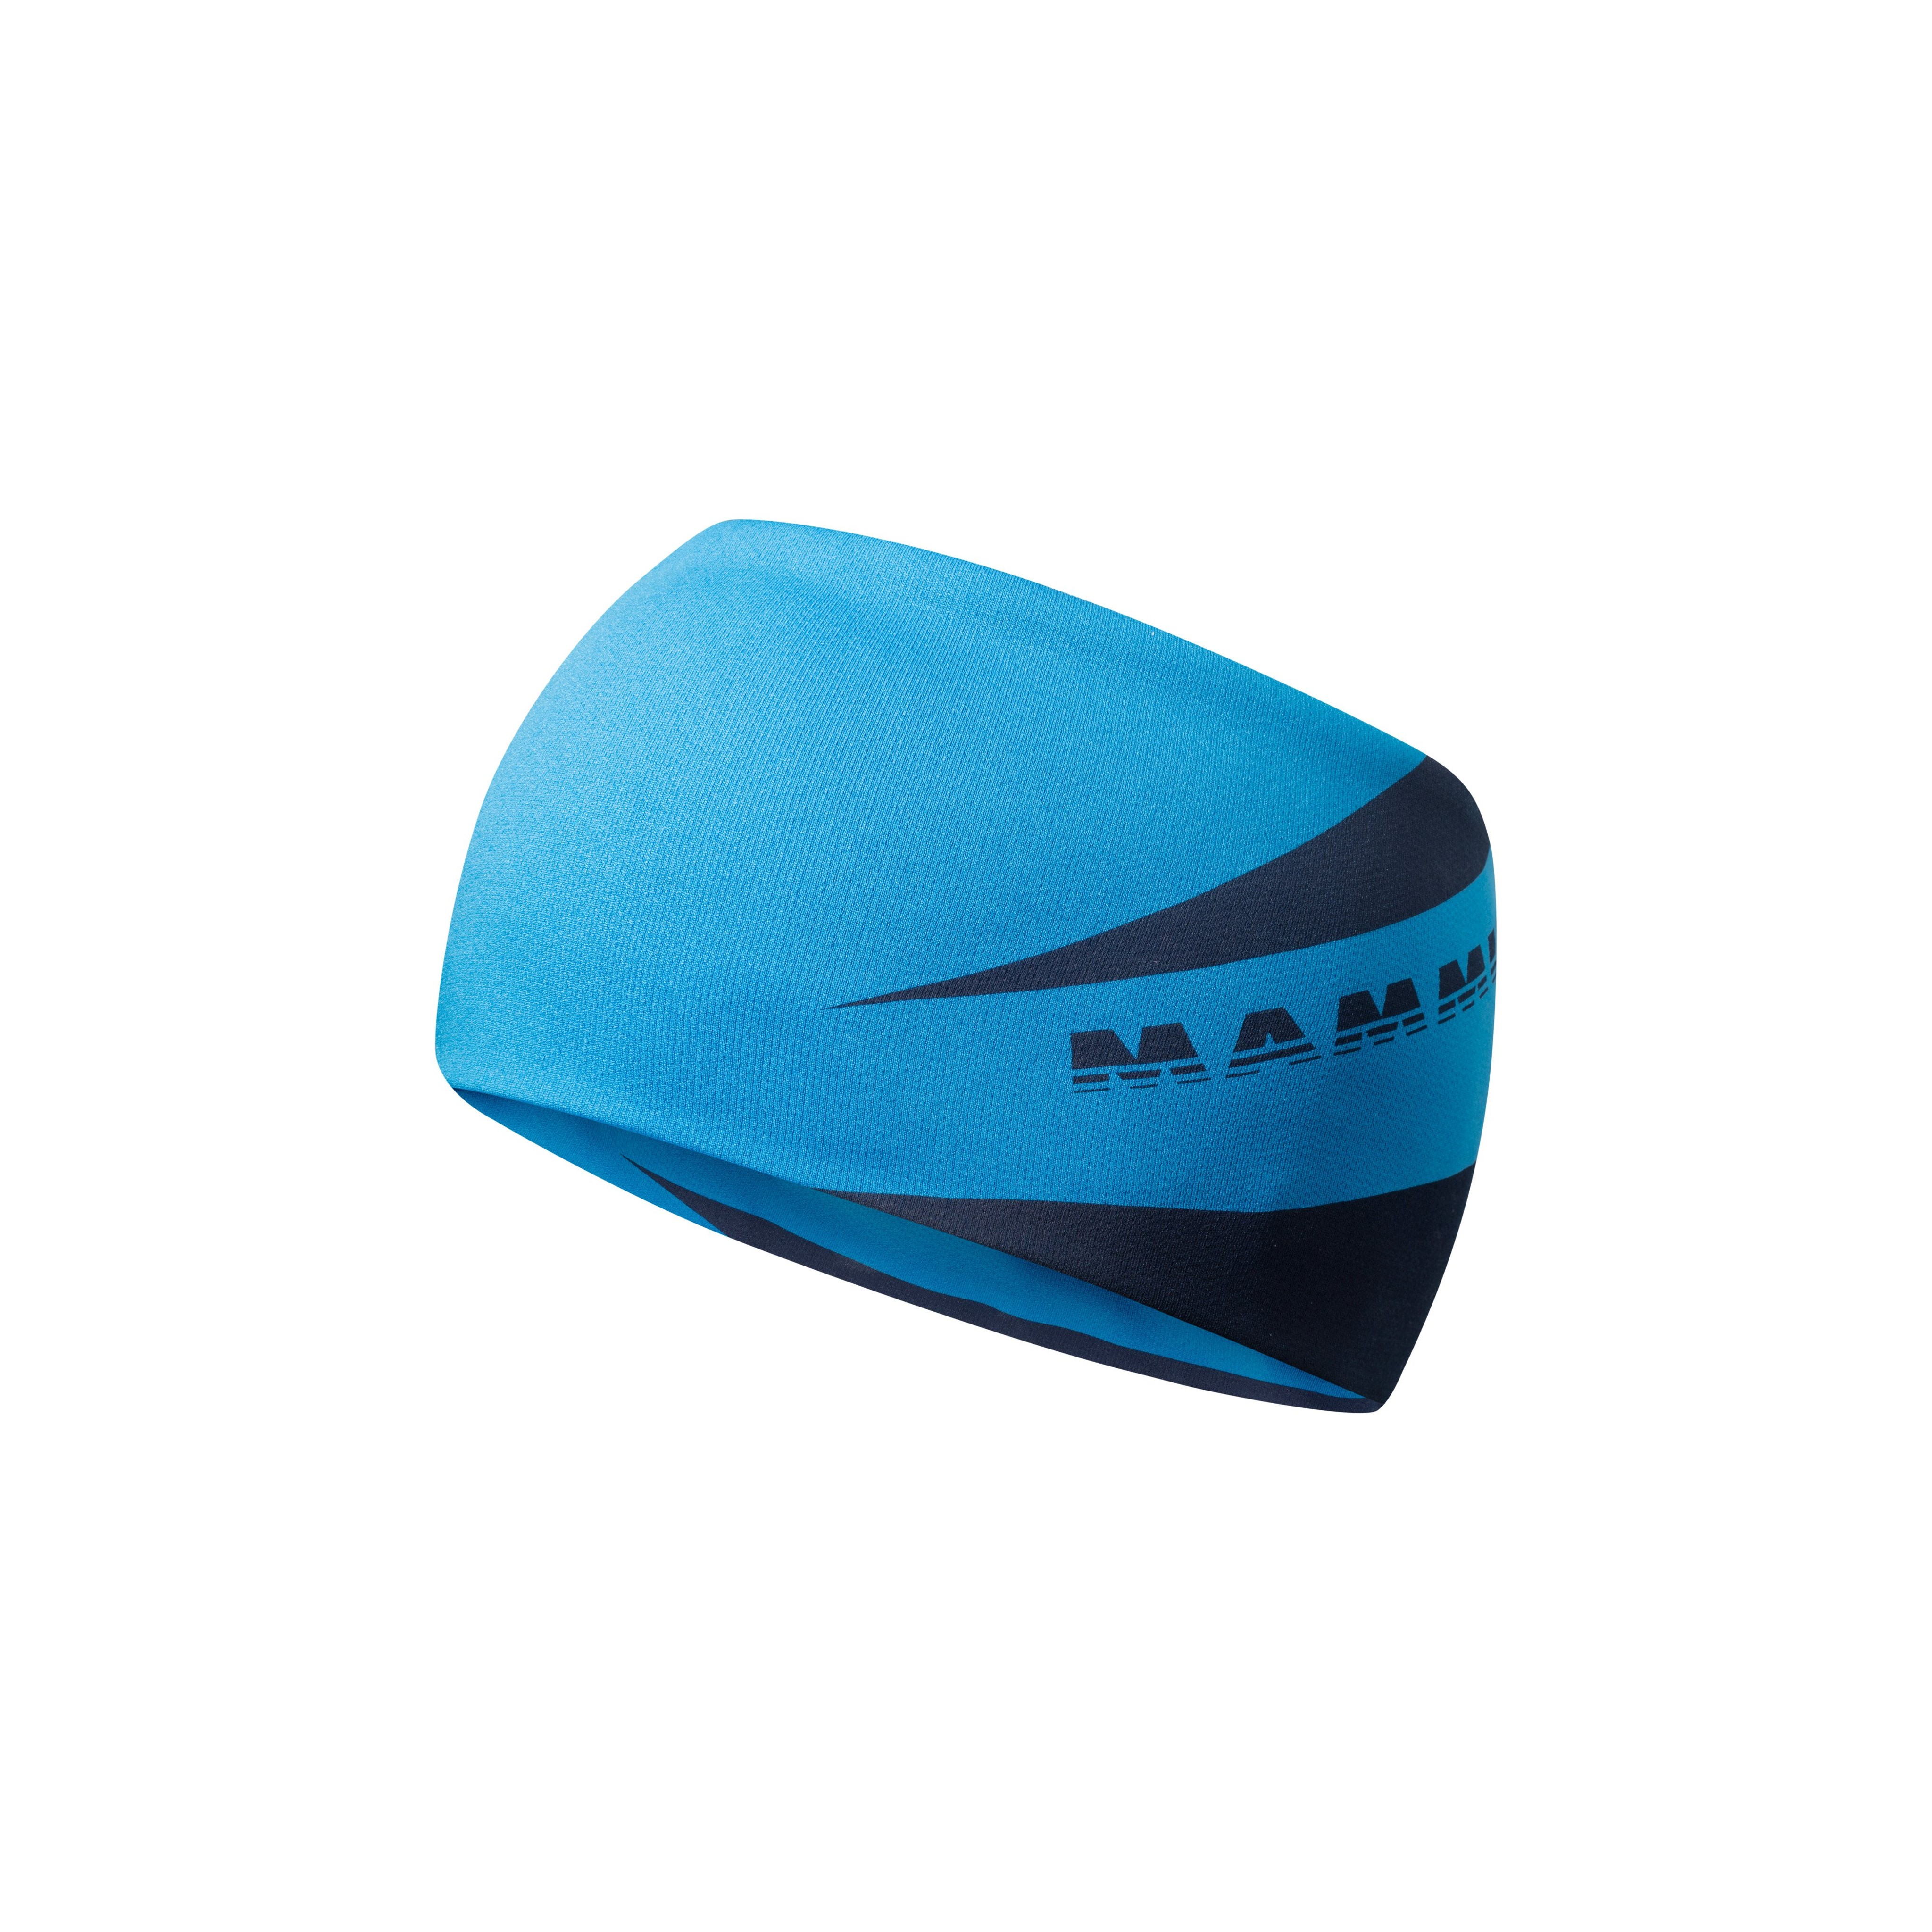 Sertig Headband - gentian-marine, one size product image